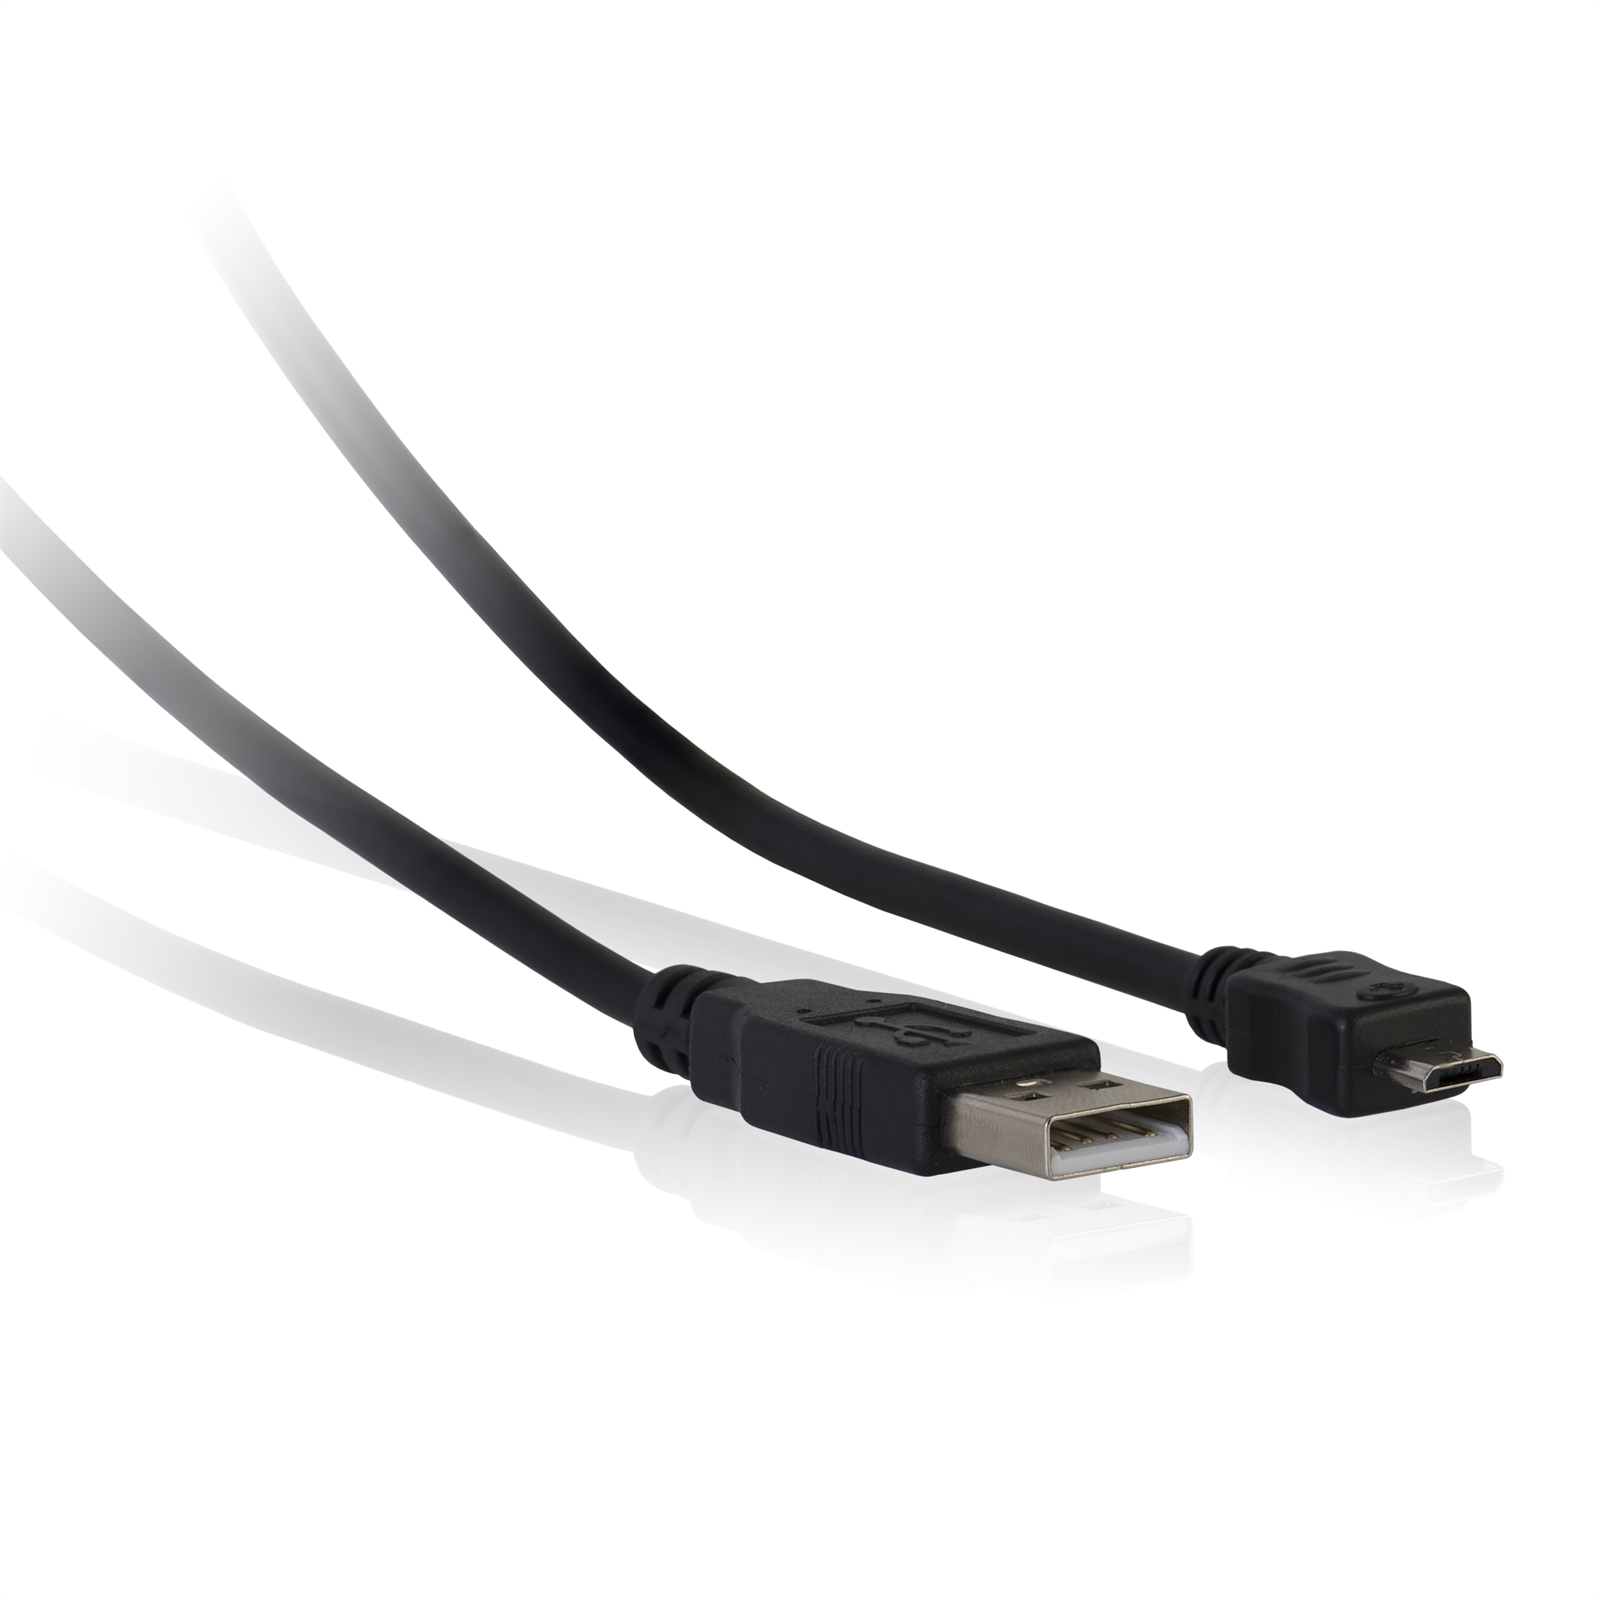 ANTSIG 1.2m Micro USB Lead